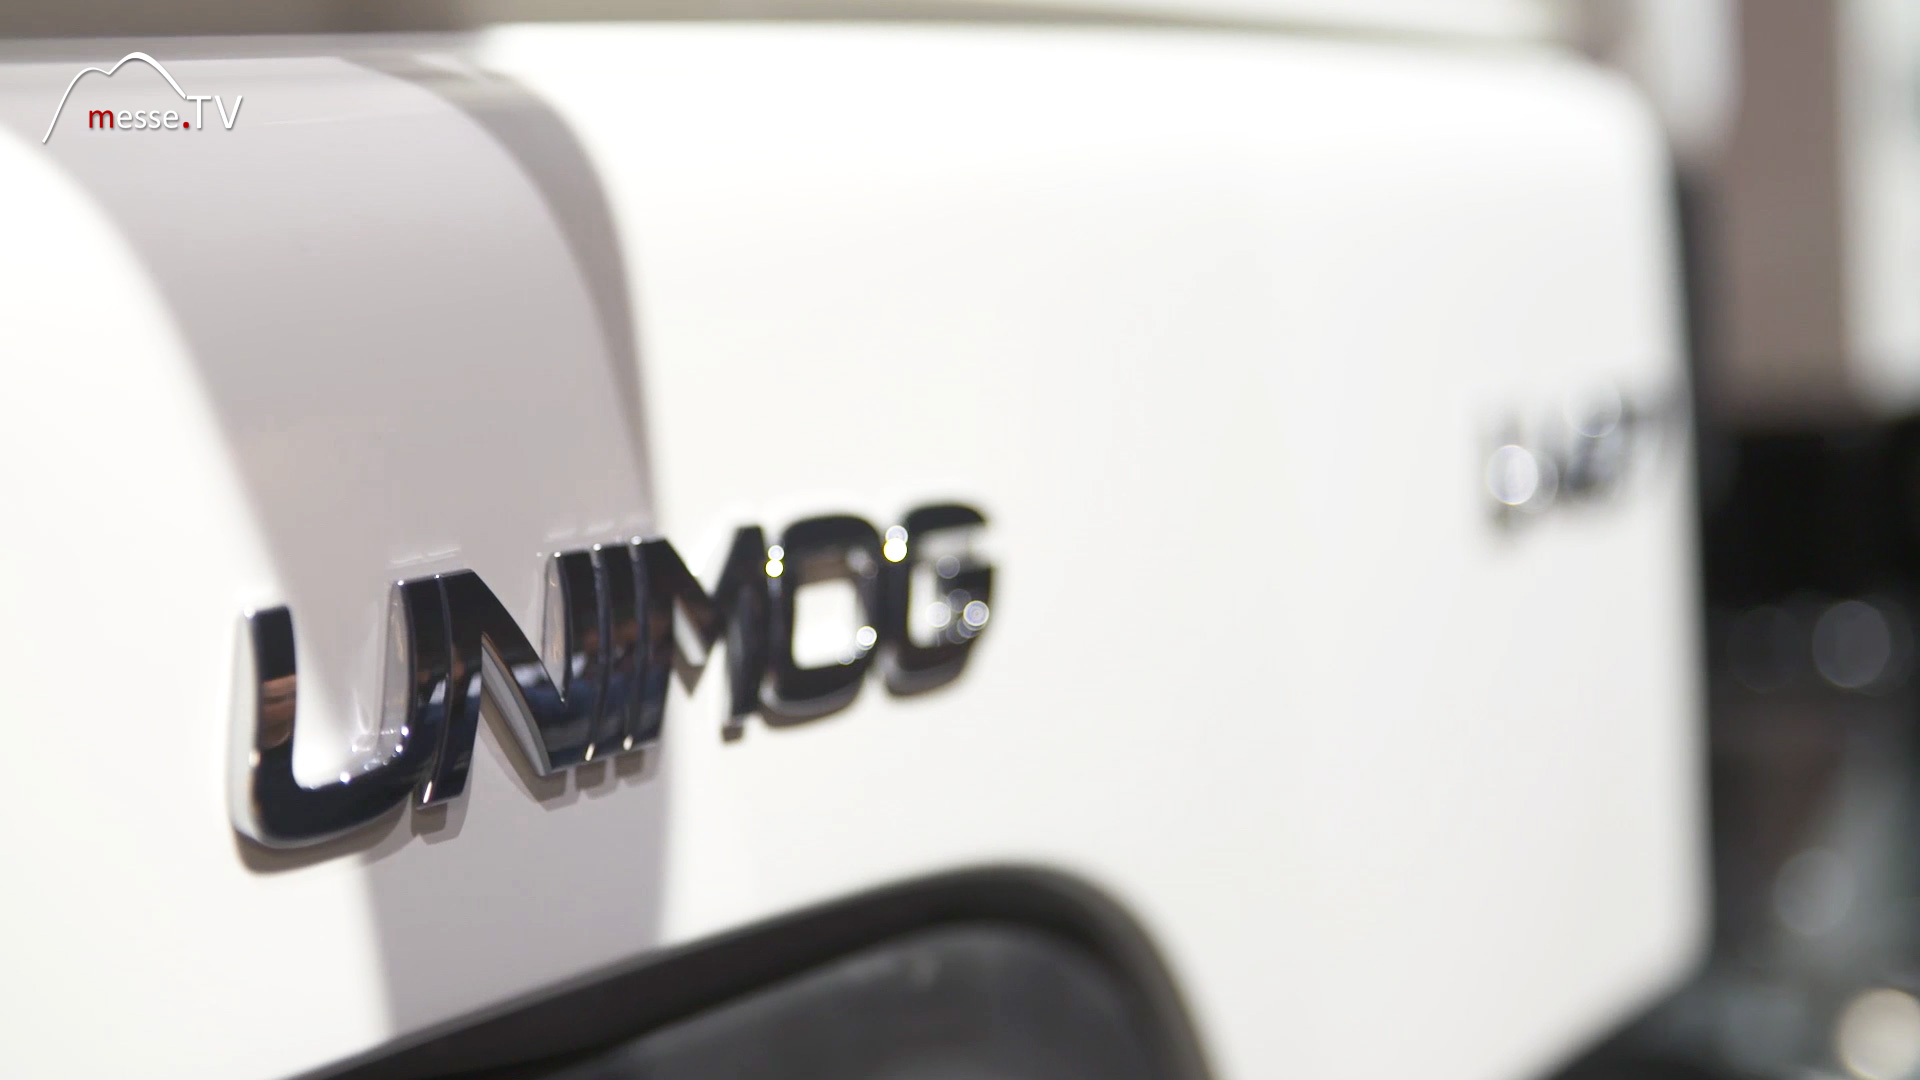 Mercedes Benz Unimog bauma 2019 Munich